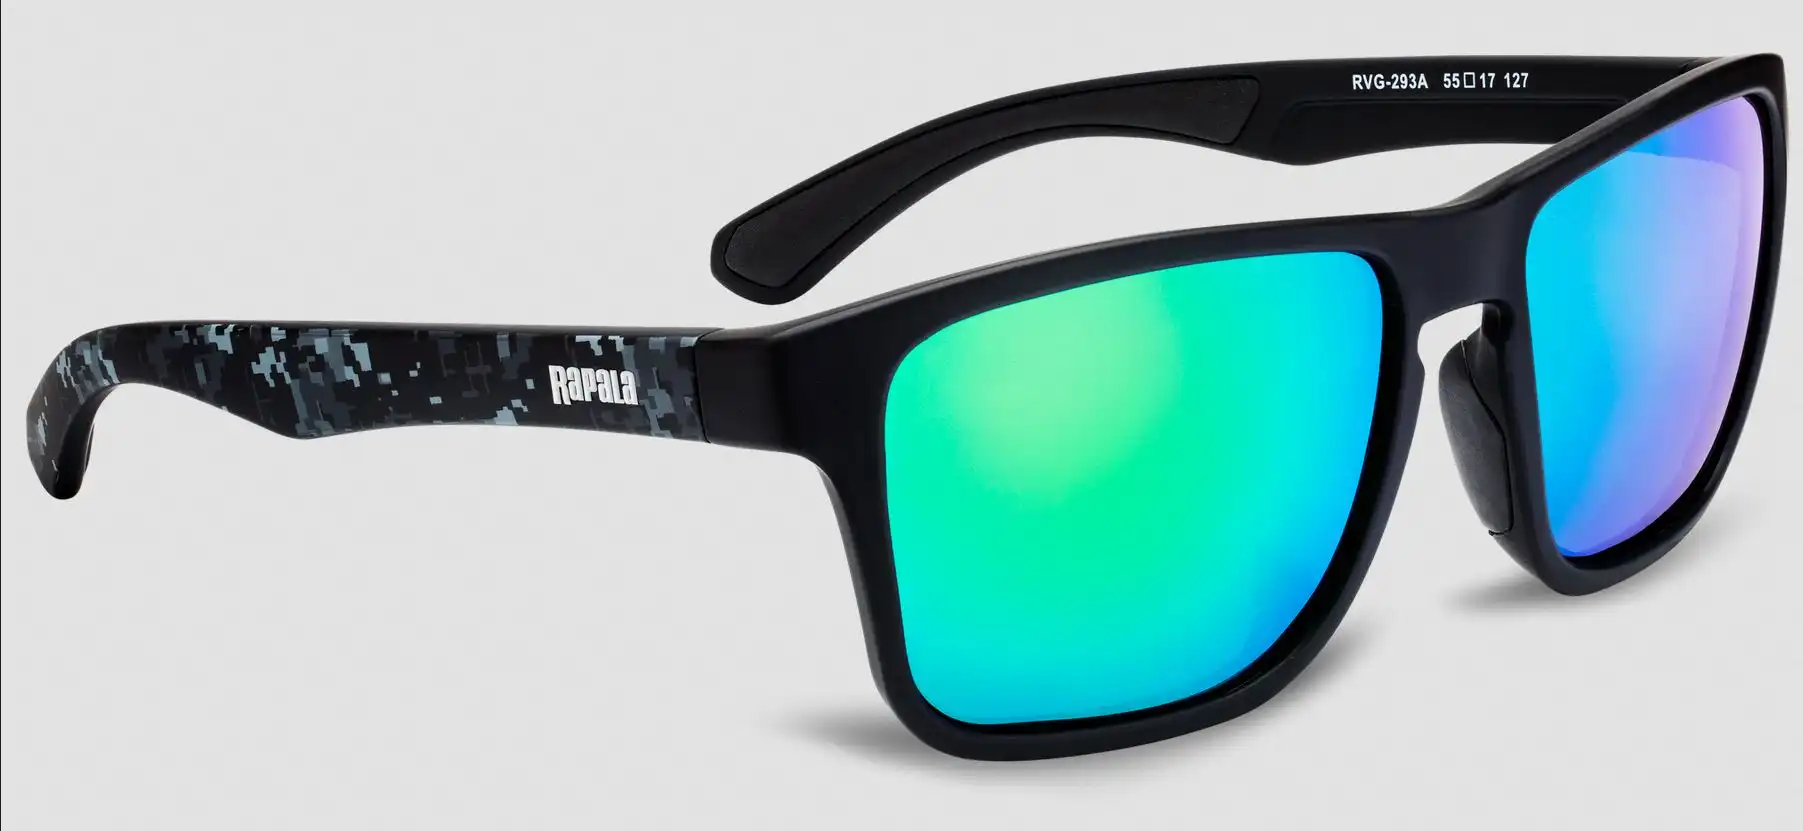 Rapala Sunglasses Urban Polbrille Schwarz/Grau